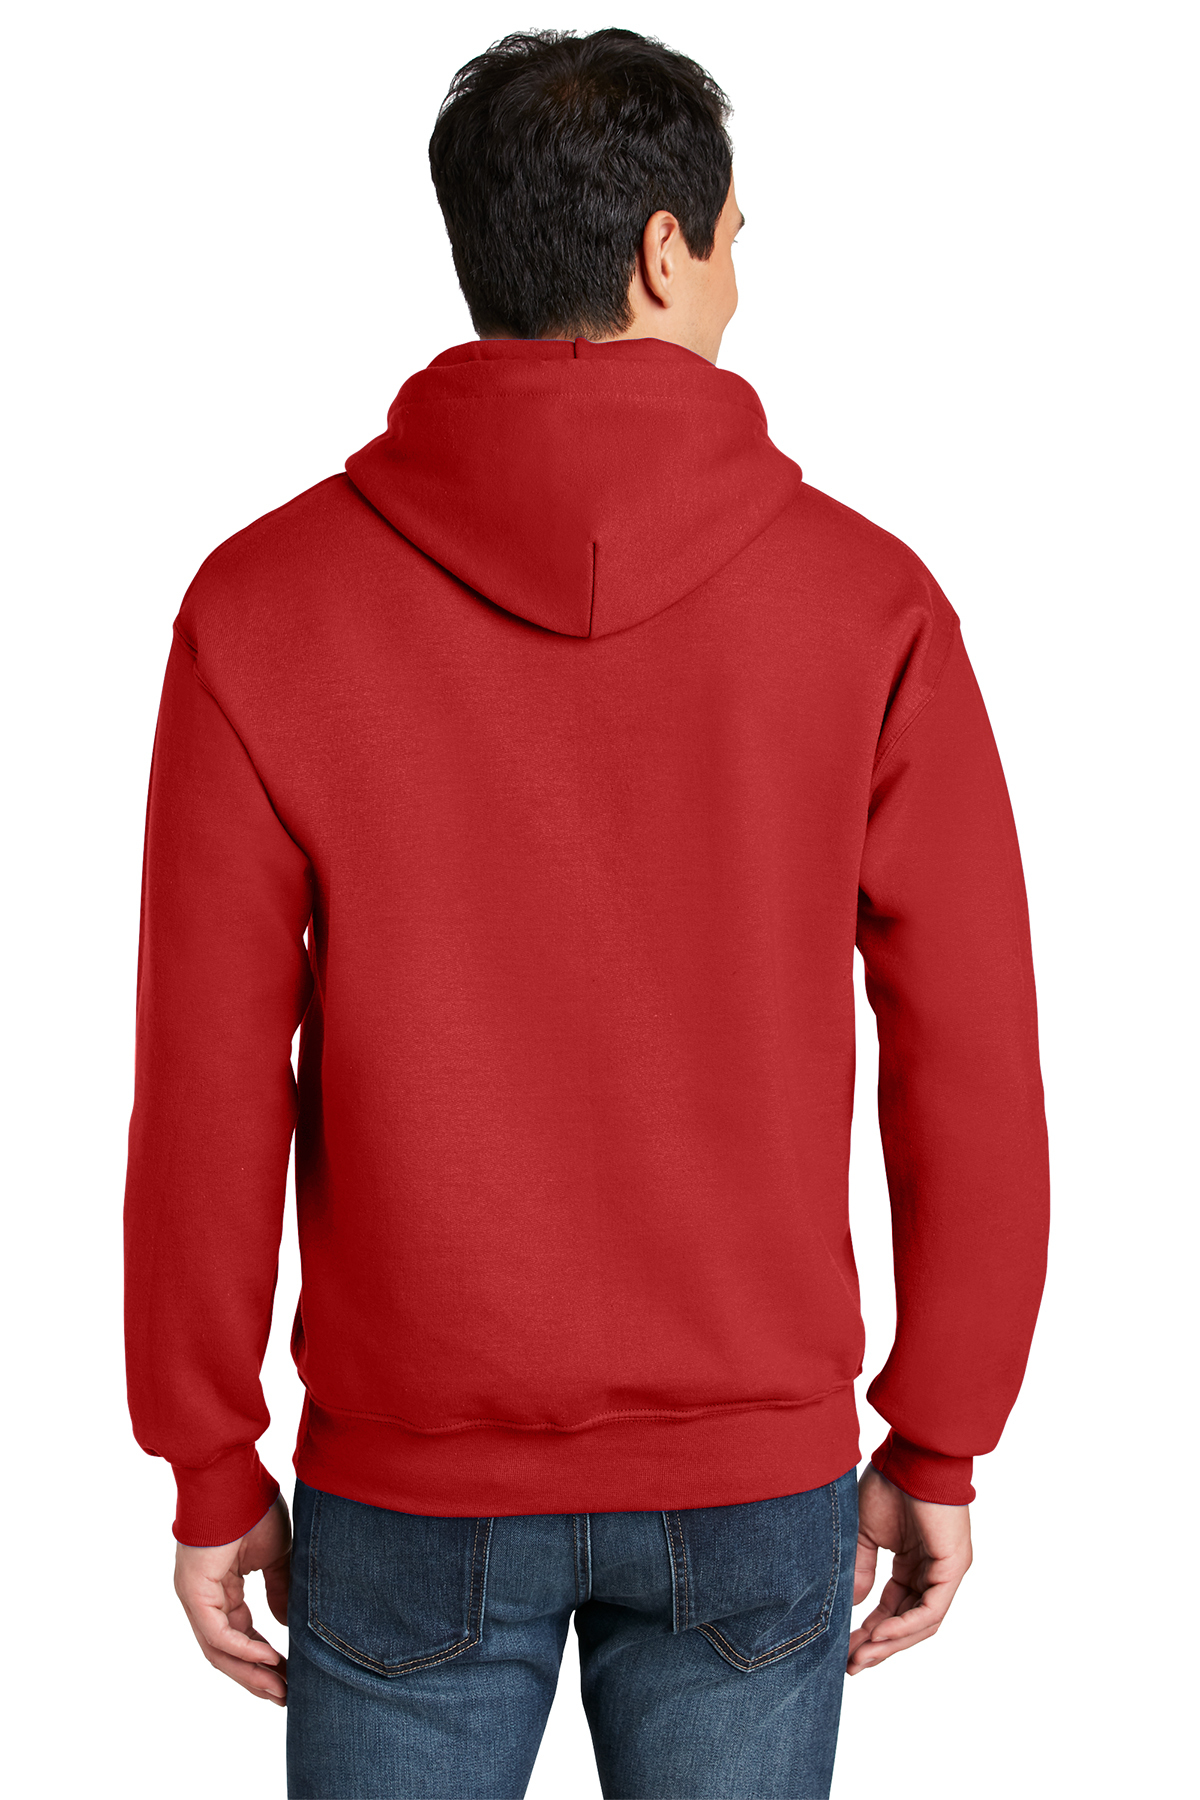 Gildan - DryBlend Pullover Hooded Sweatshirt | Product | SanMar | Sweatshirts